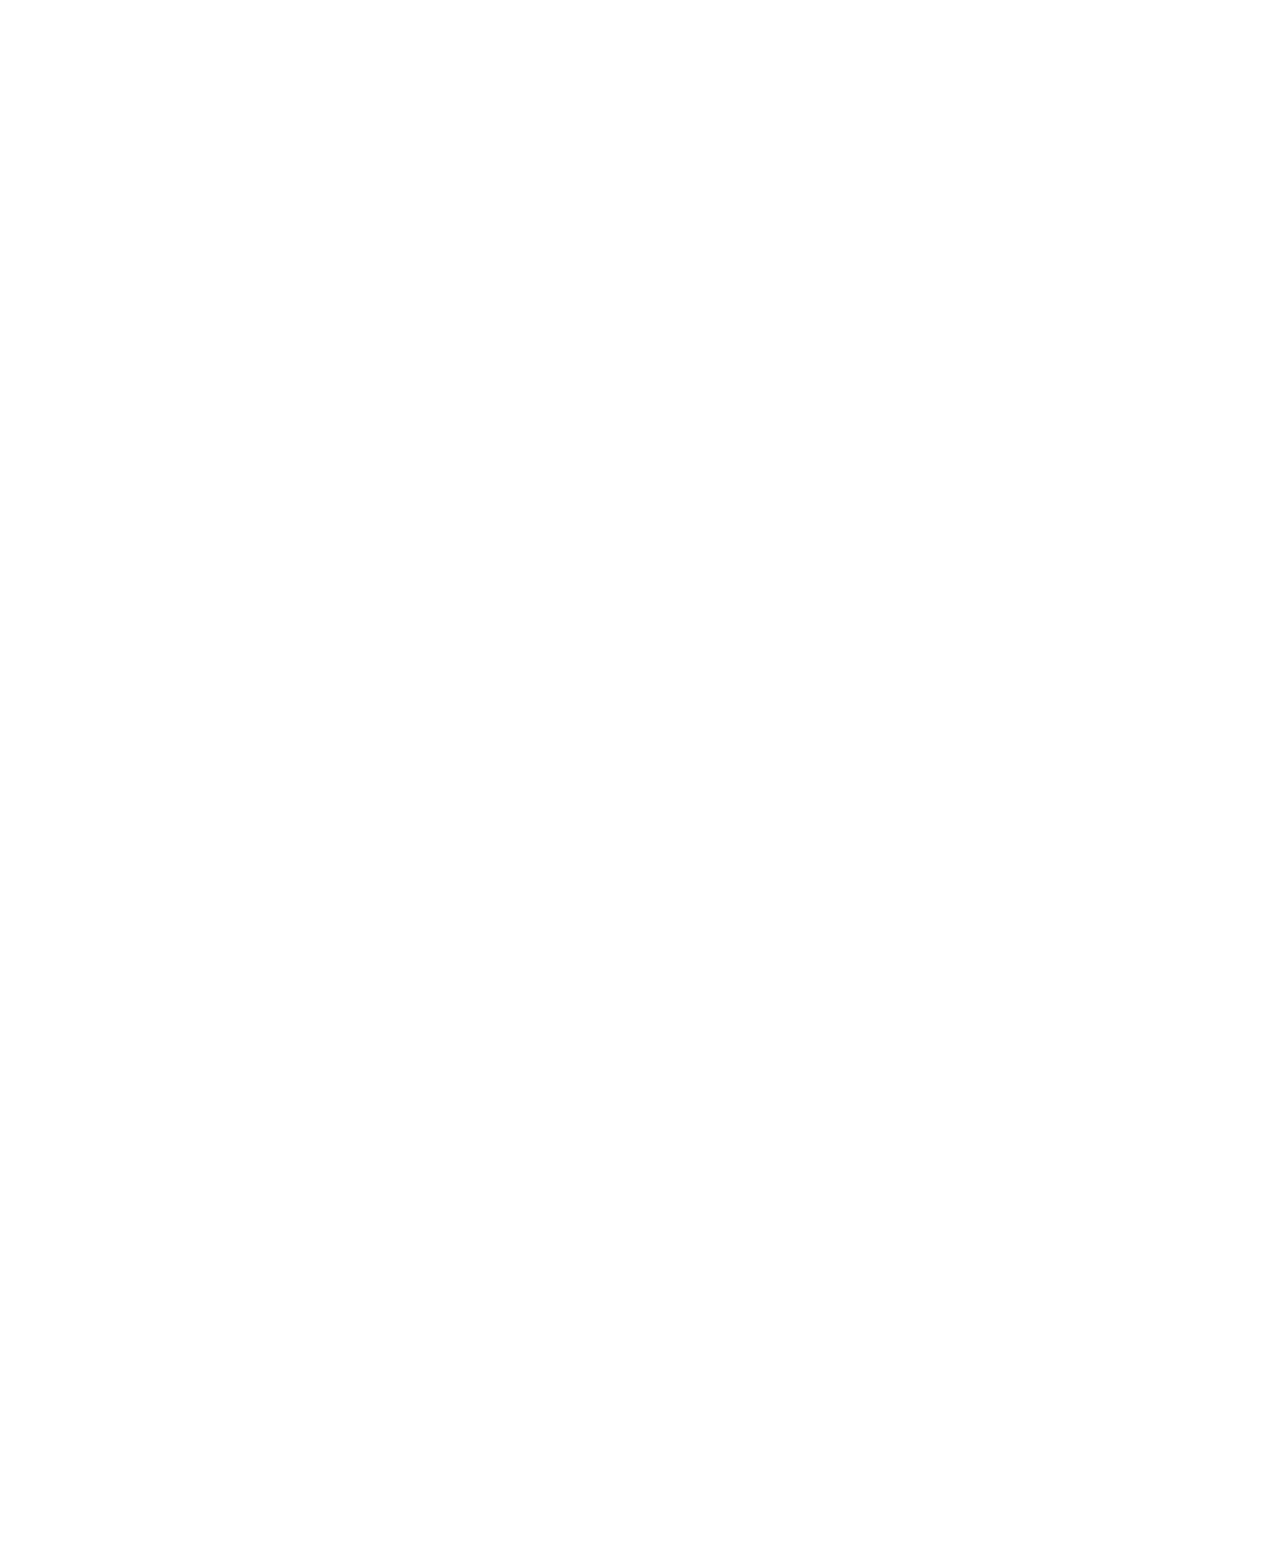 Daifuku logo for dark backgrounds (transparent PNG)